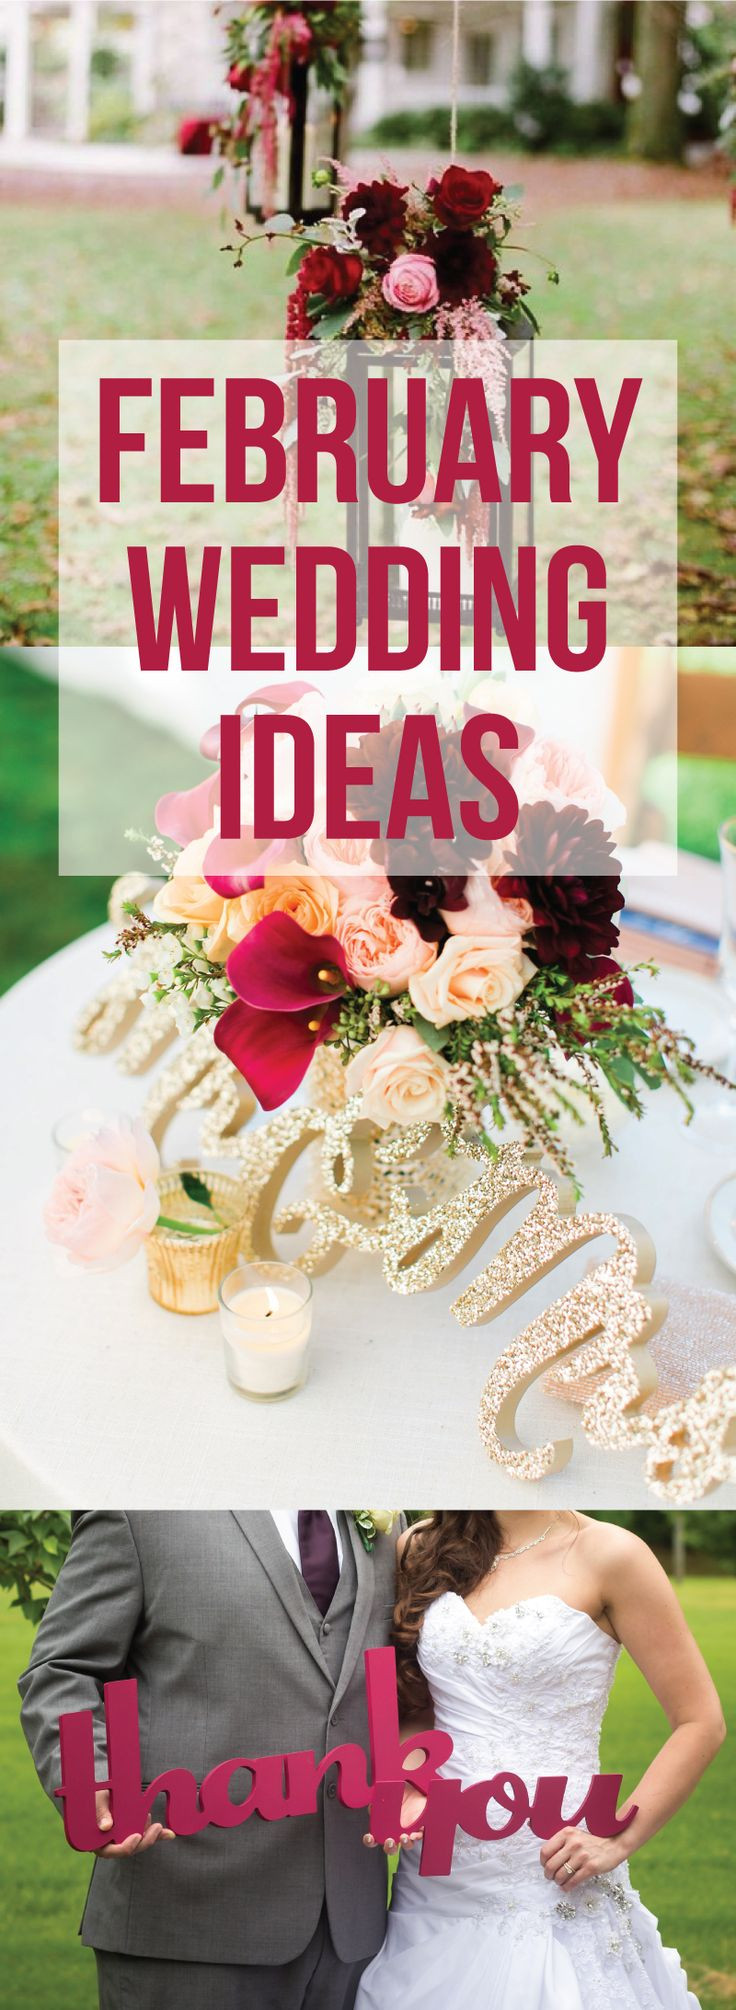 February Wedding Themes
 Best 25 February wedding ideas on Pinterest